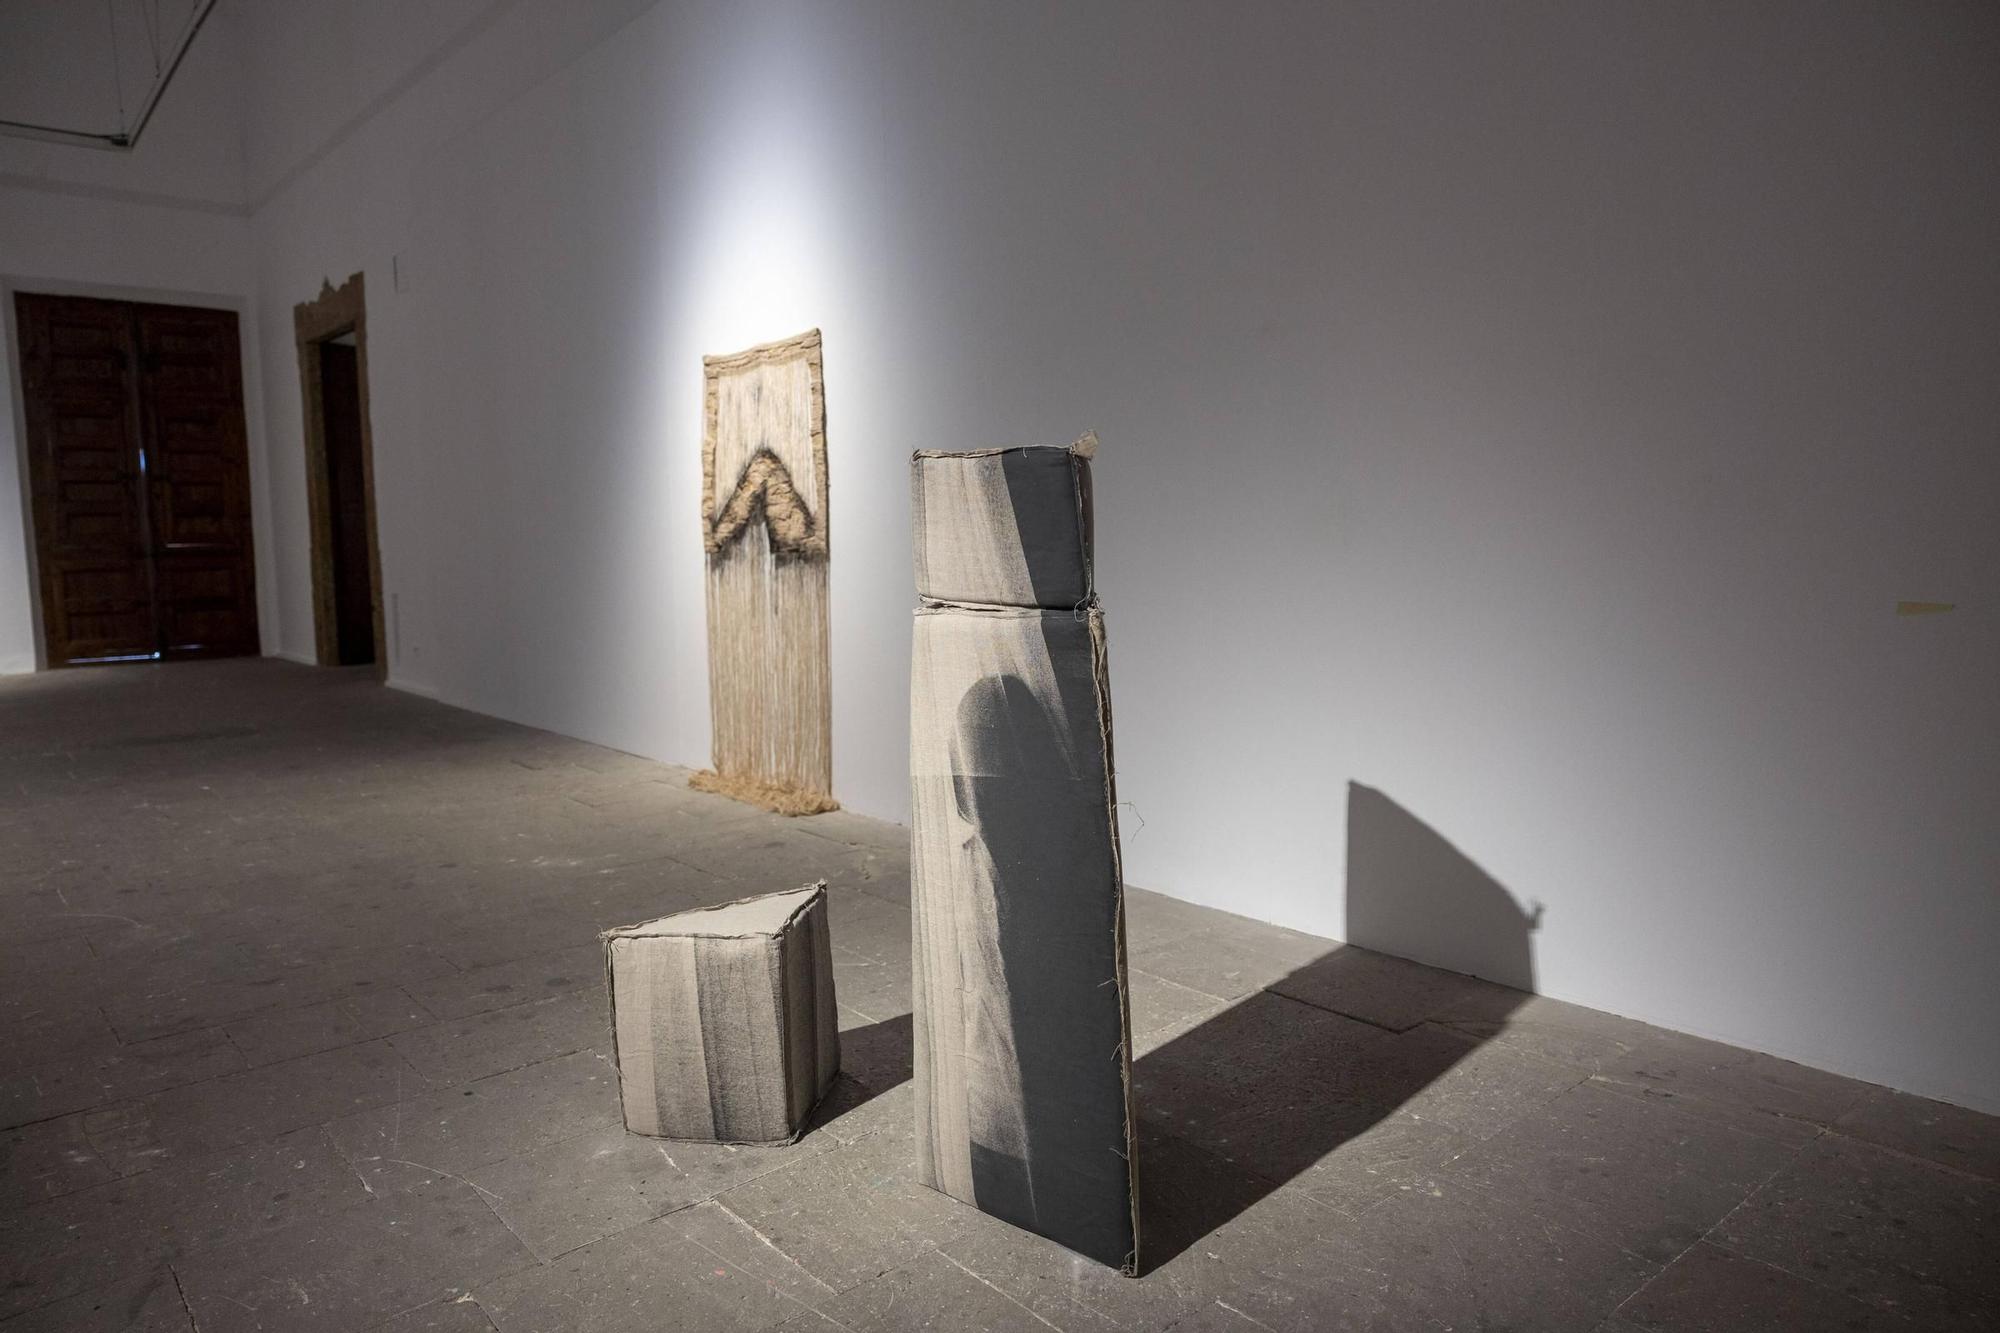 Exposición colectiva 'Breaking the monument' en el Casal Solleric